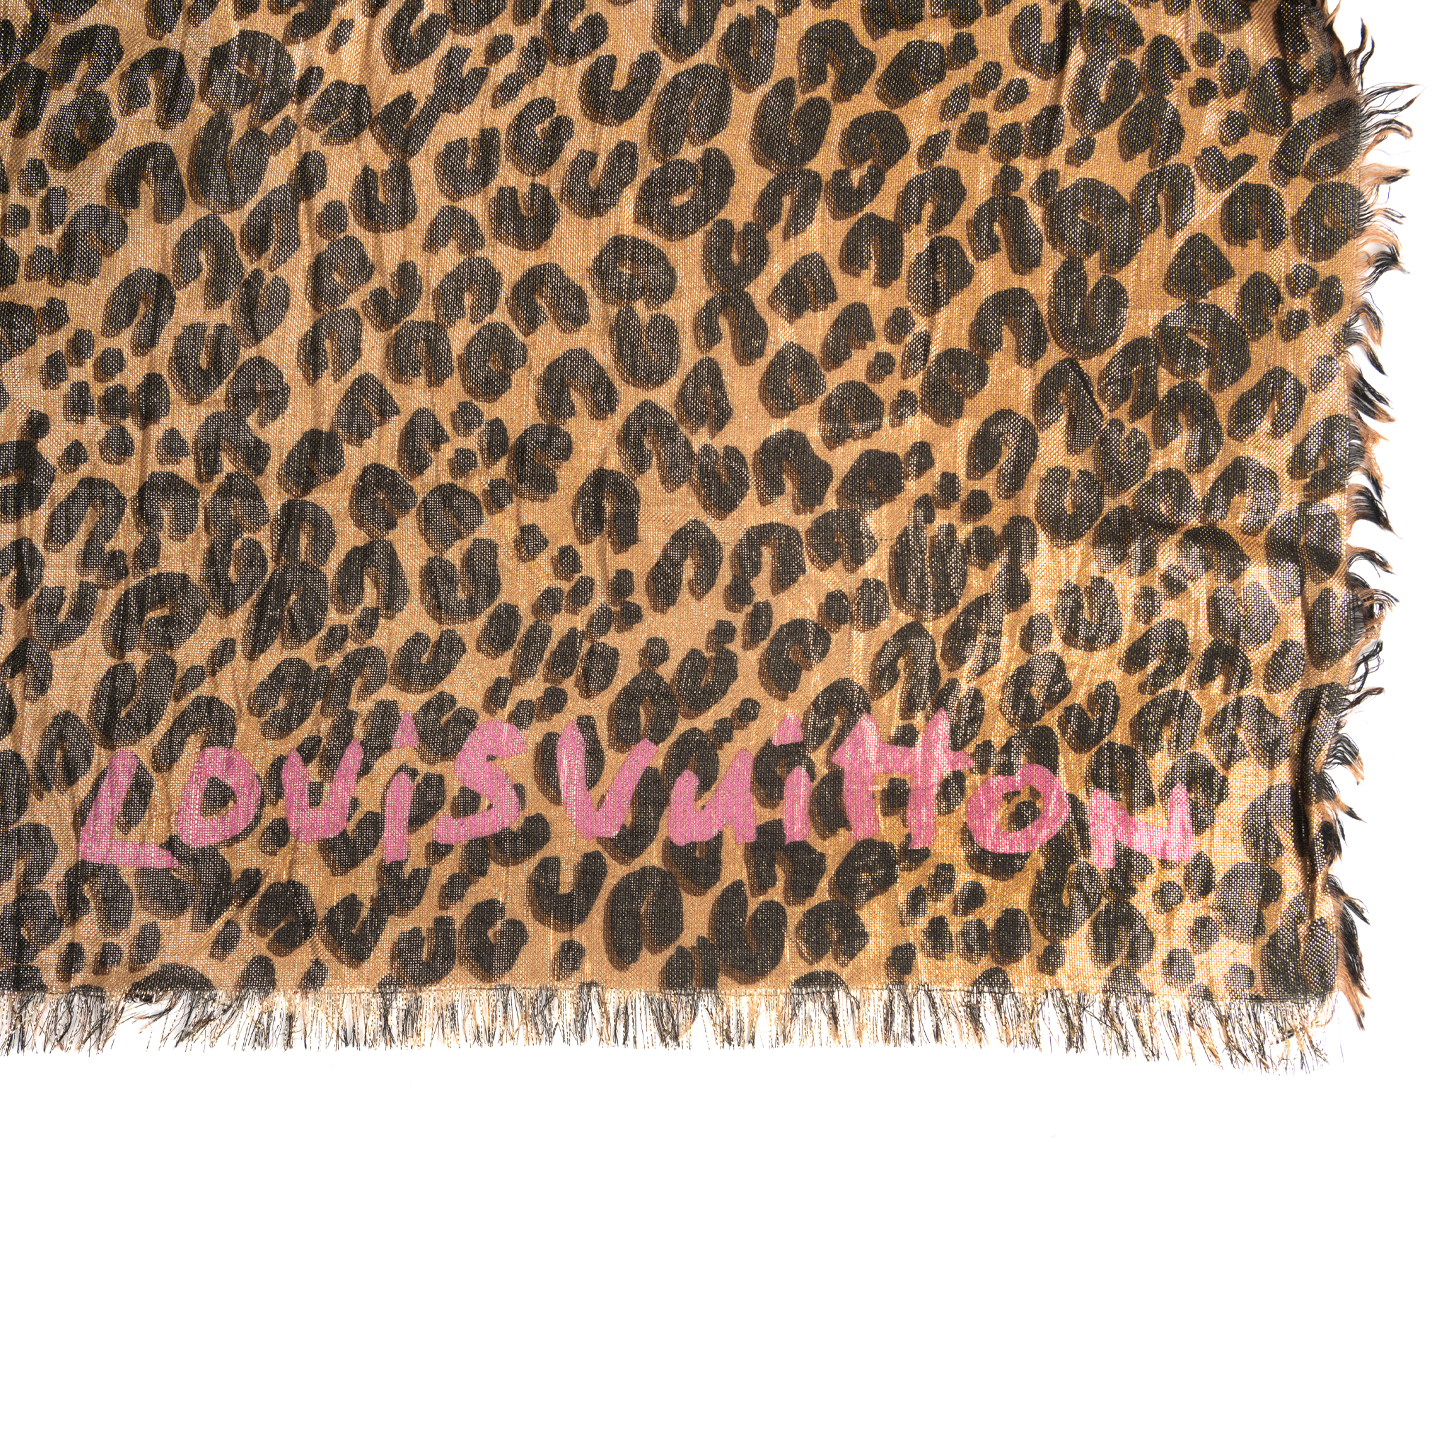 Louis Vuitton Stephen Sprouse Leopard Cashmere Silk Stole at